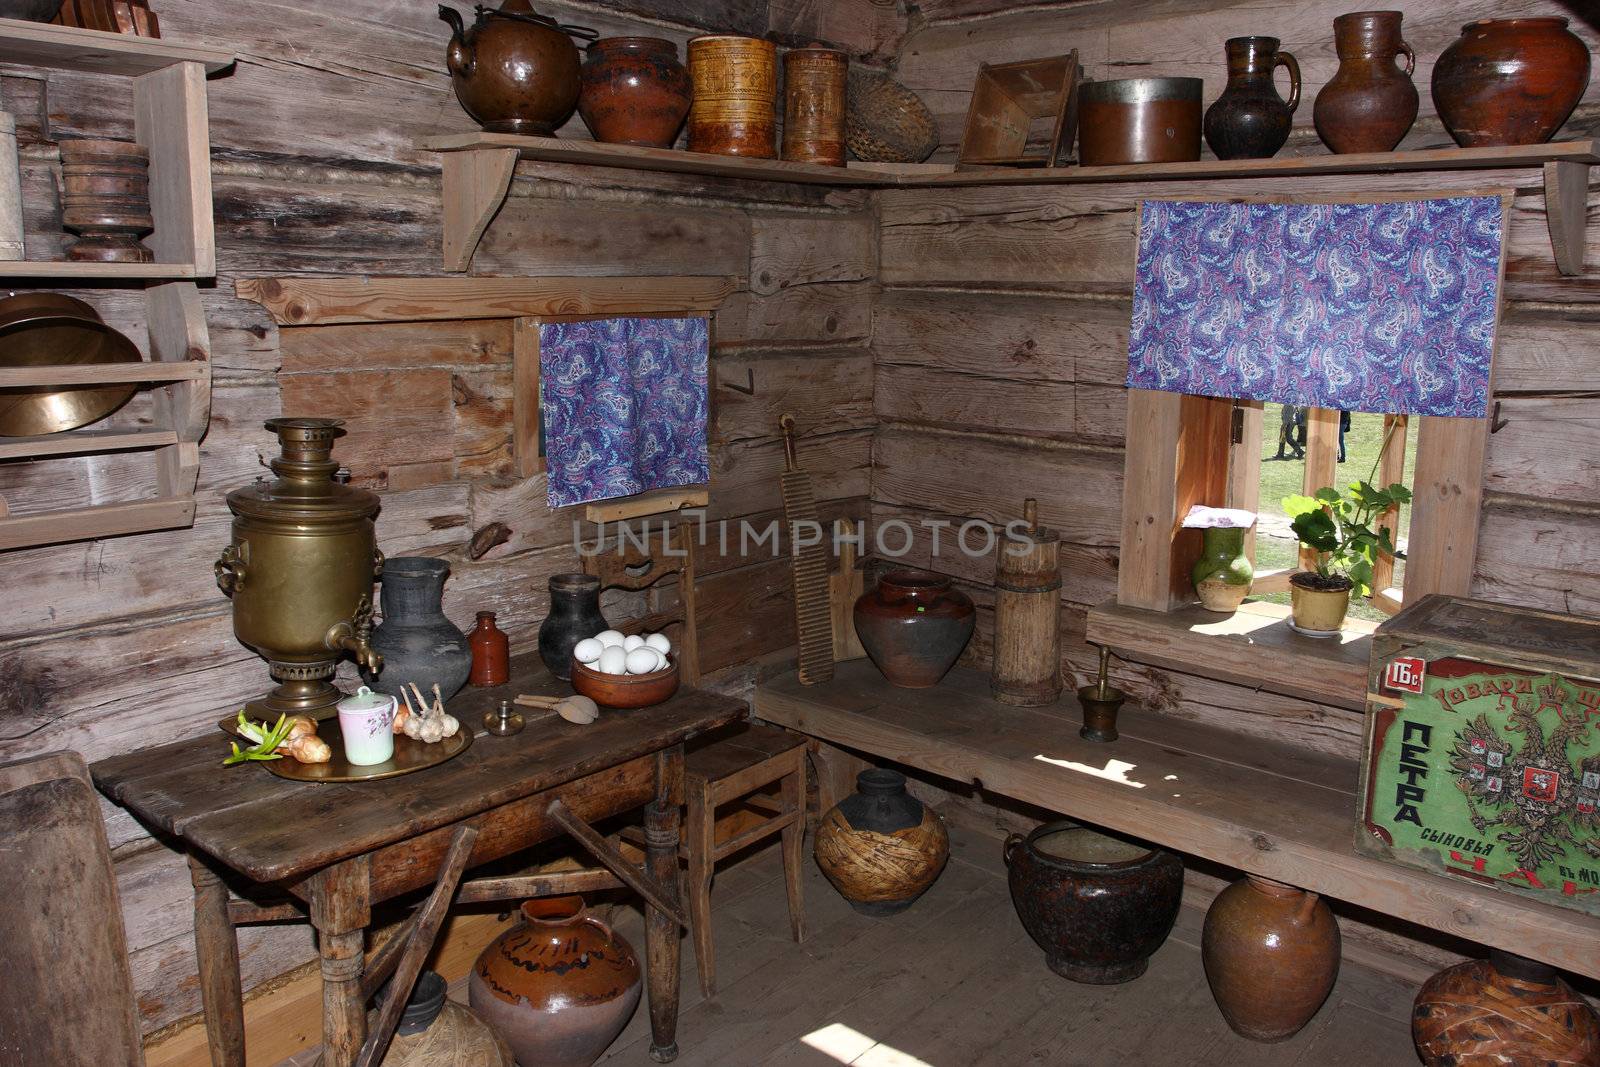 samovar, eggs, kitchen, table, jug, clay, room, onions, garlic, wooden, house, walls, bars